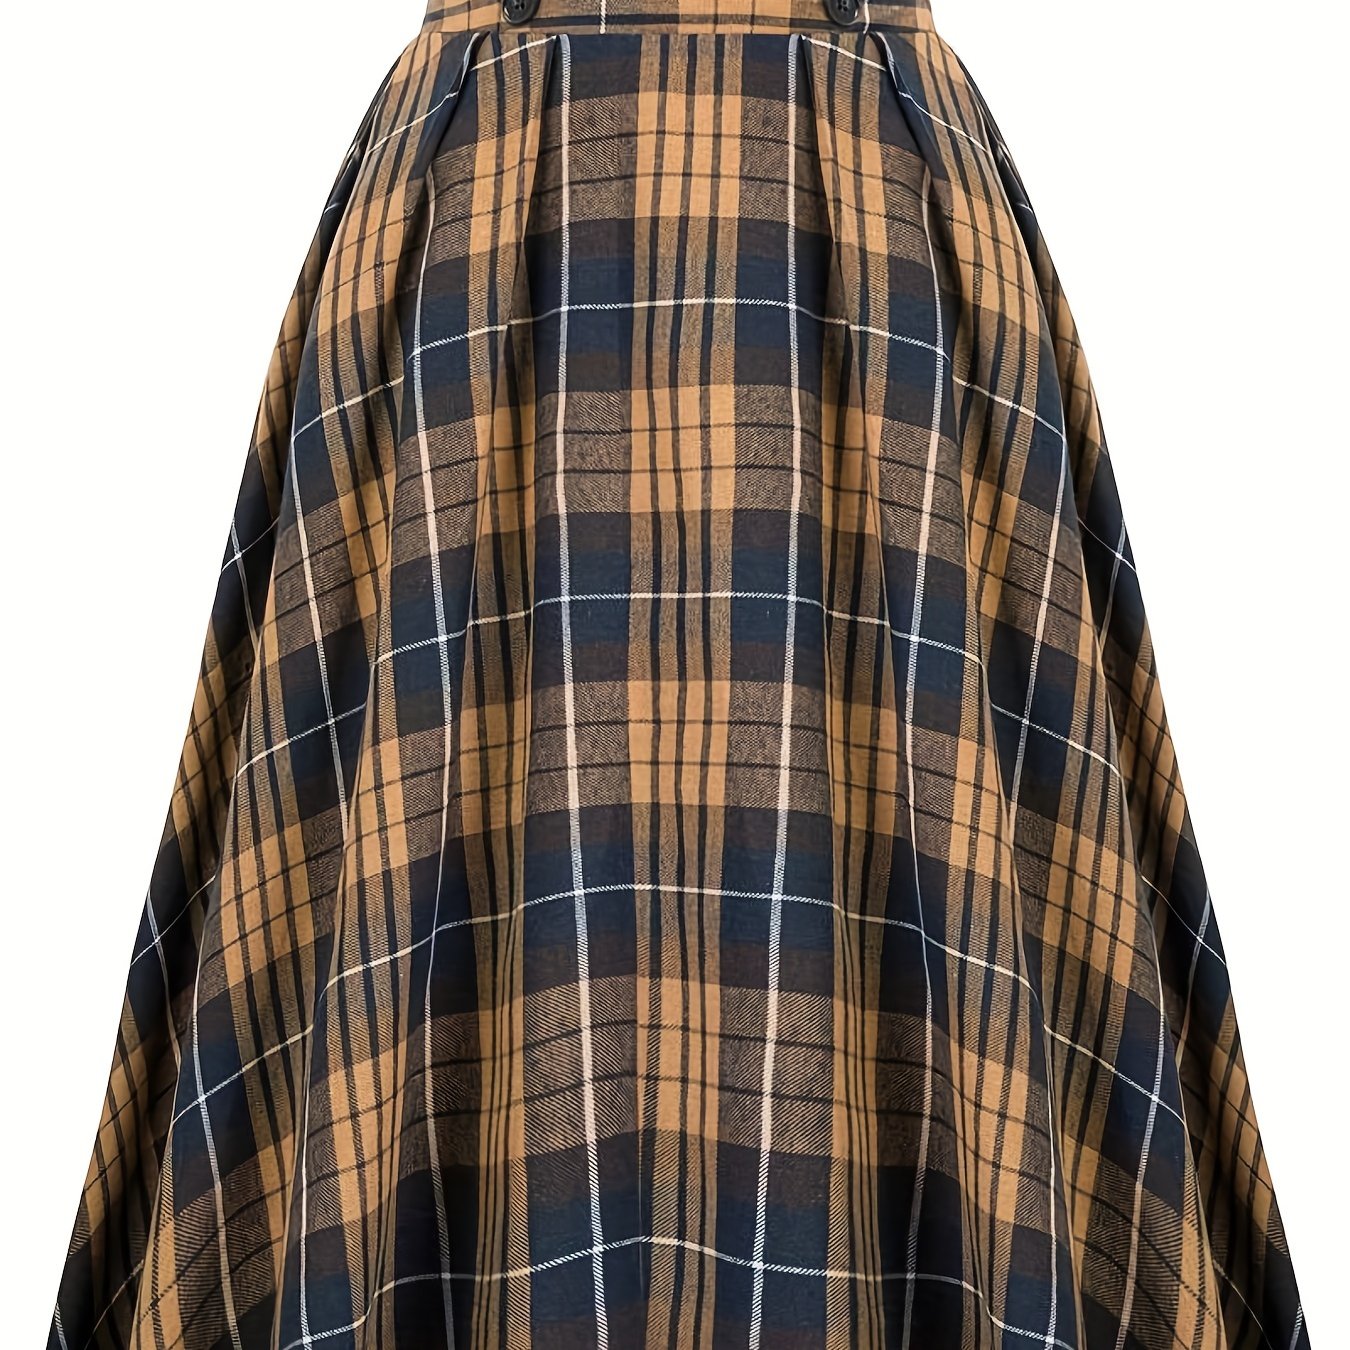 Plus Size Grunge Skirt, Women's Plus Plaid Print Button Decor Elastic Ruffle Skirt